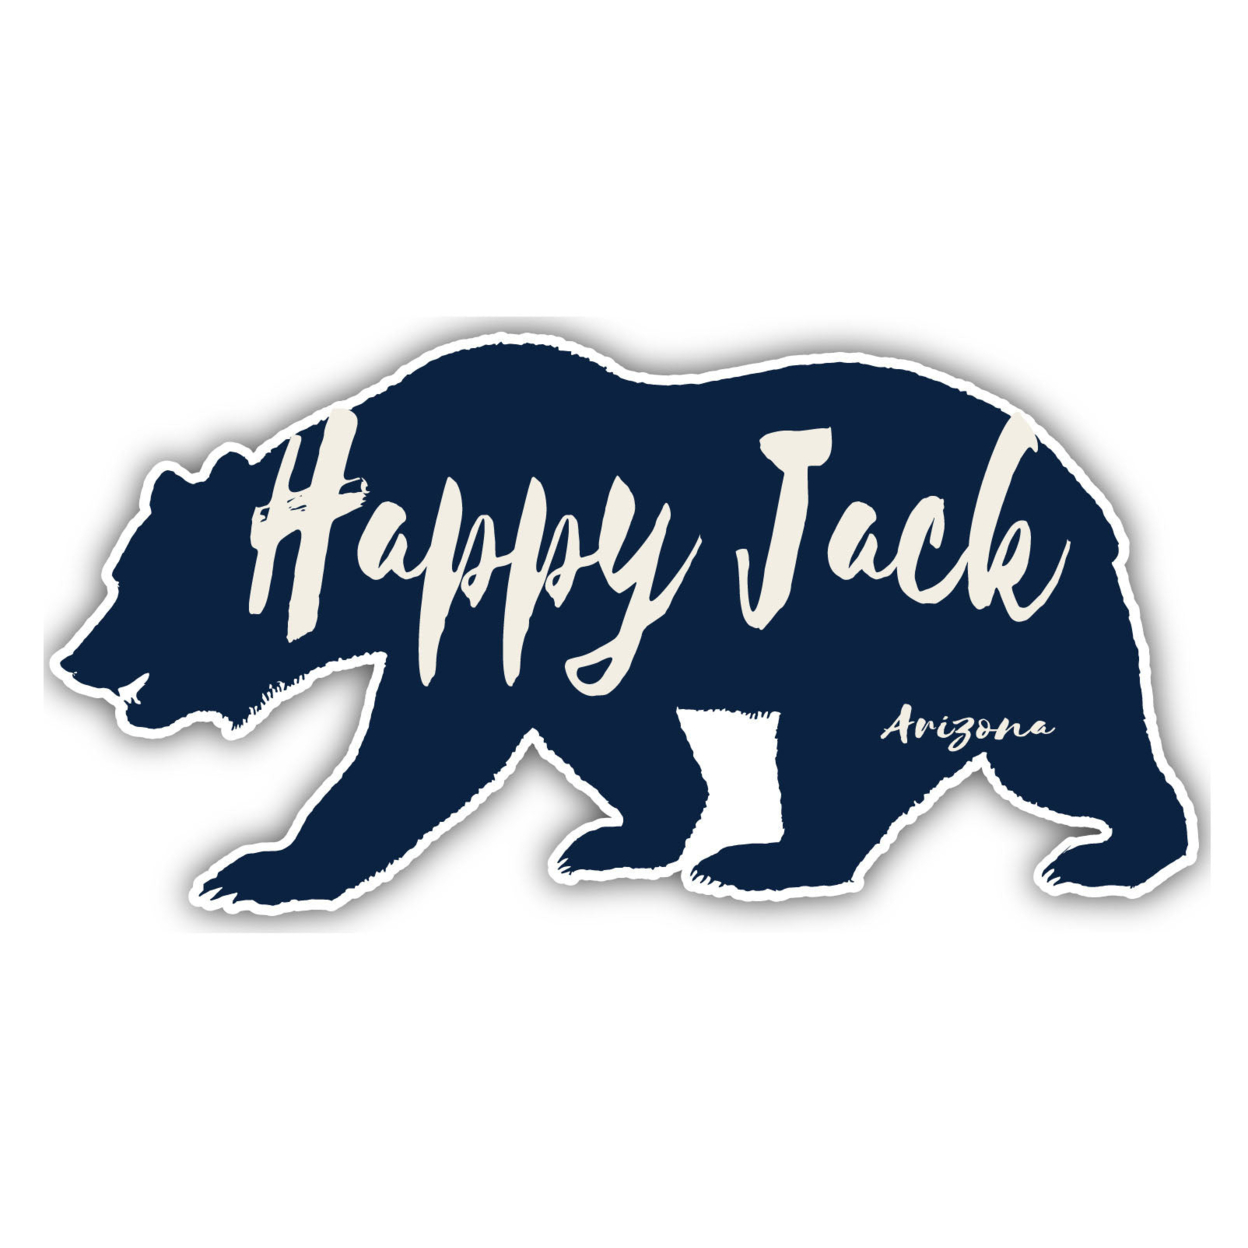 Happy Jack Arizona Souvenir Decorative Stickers (Choose Theme And Size) - Single Unit, 10-Inch, Tent